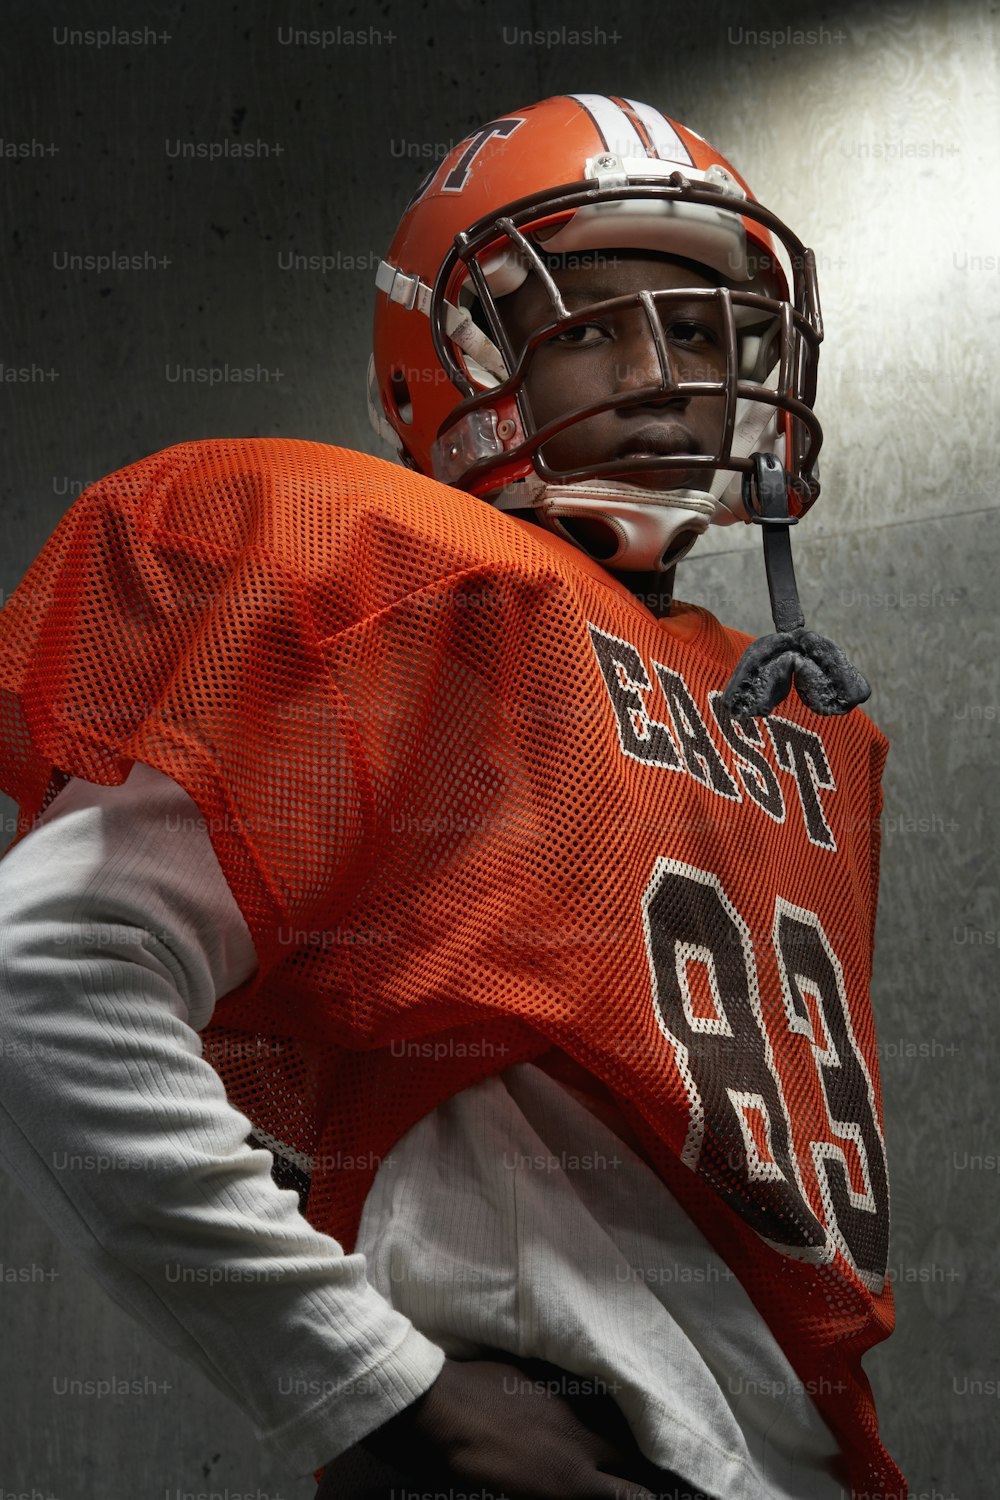 a football player wearing an orange jersey and helmet